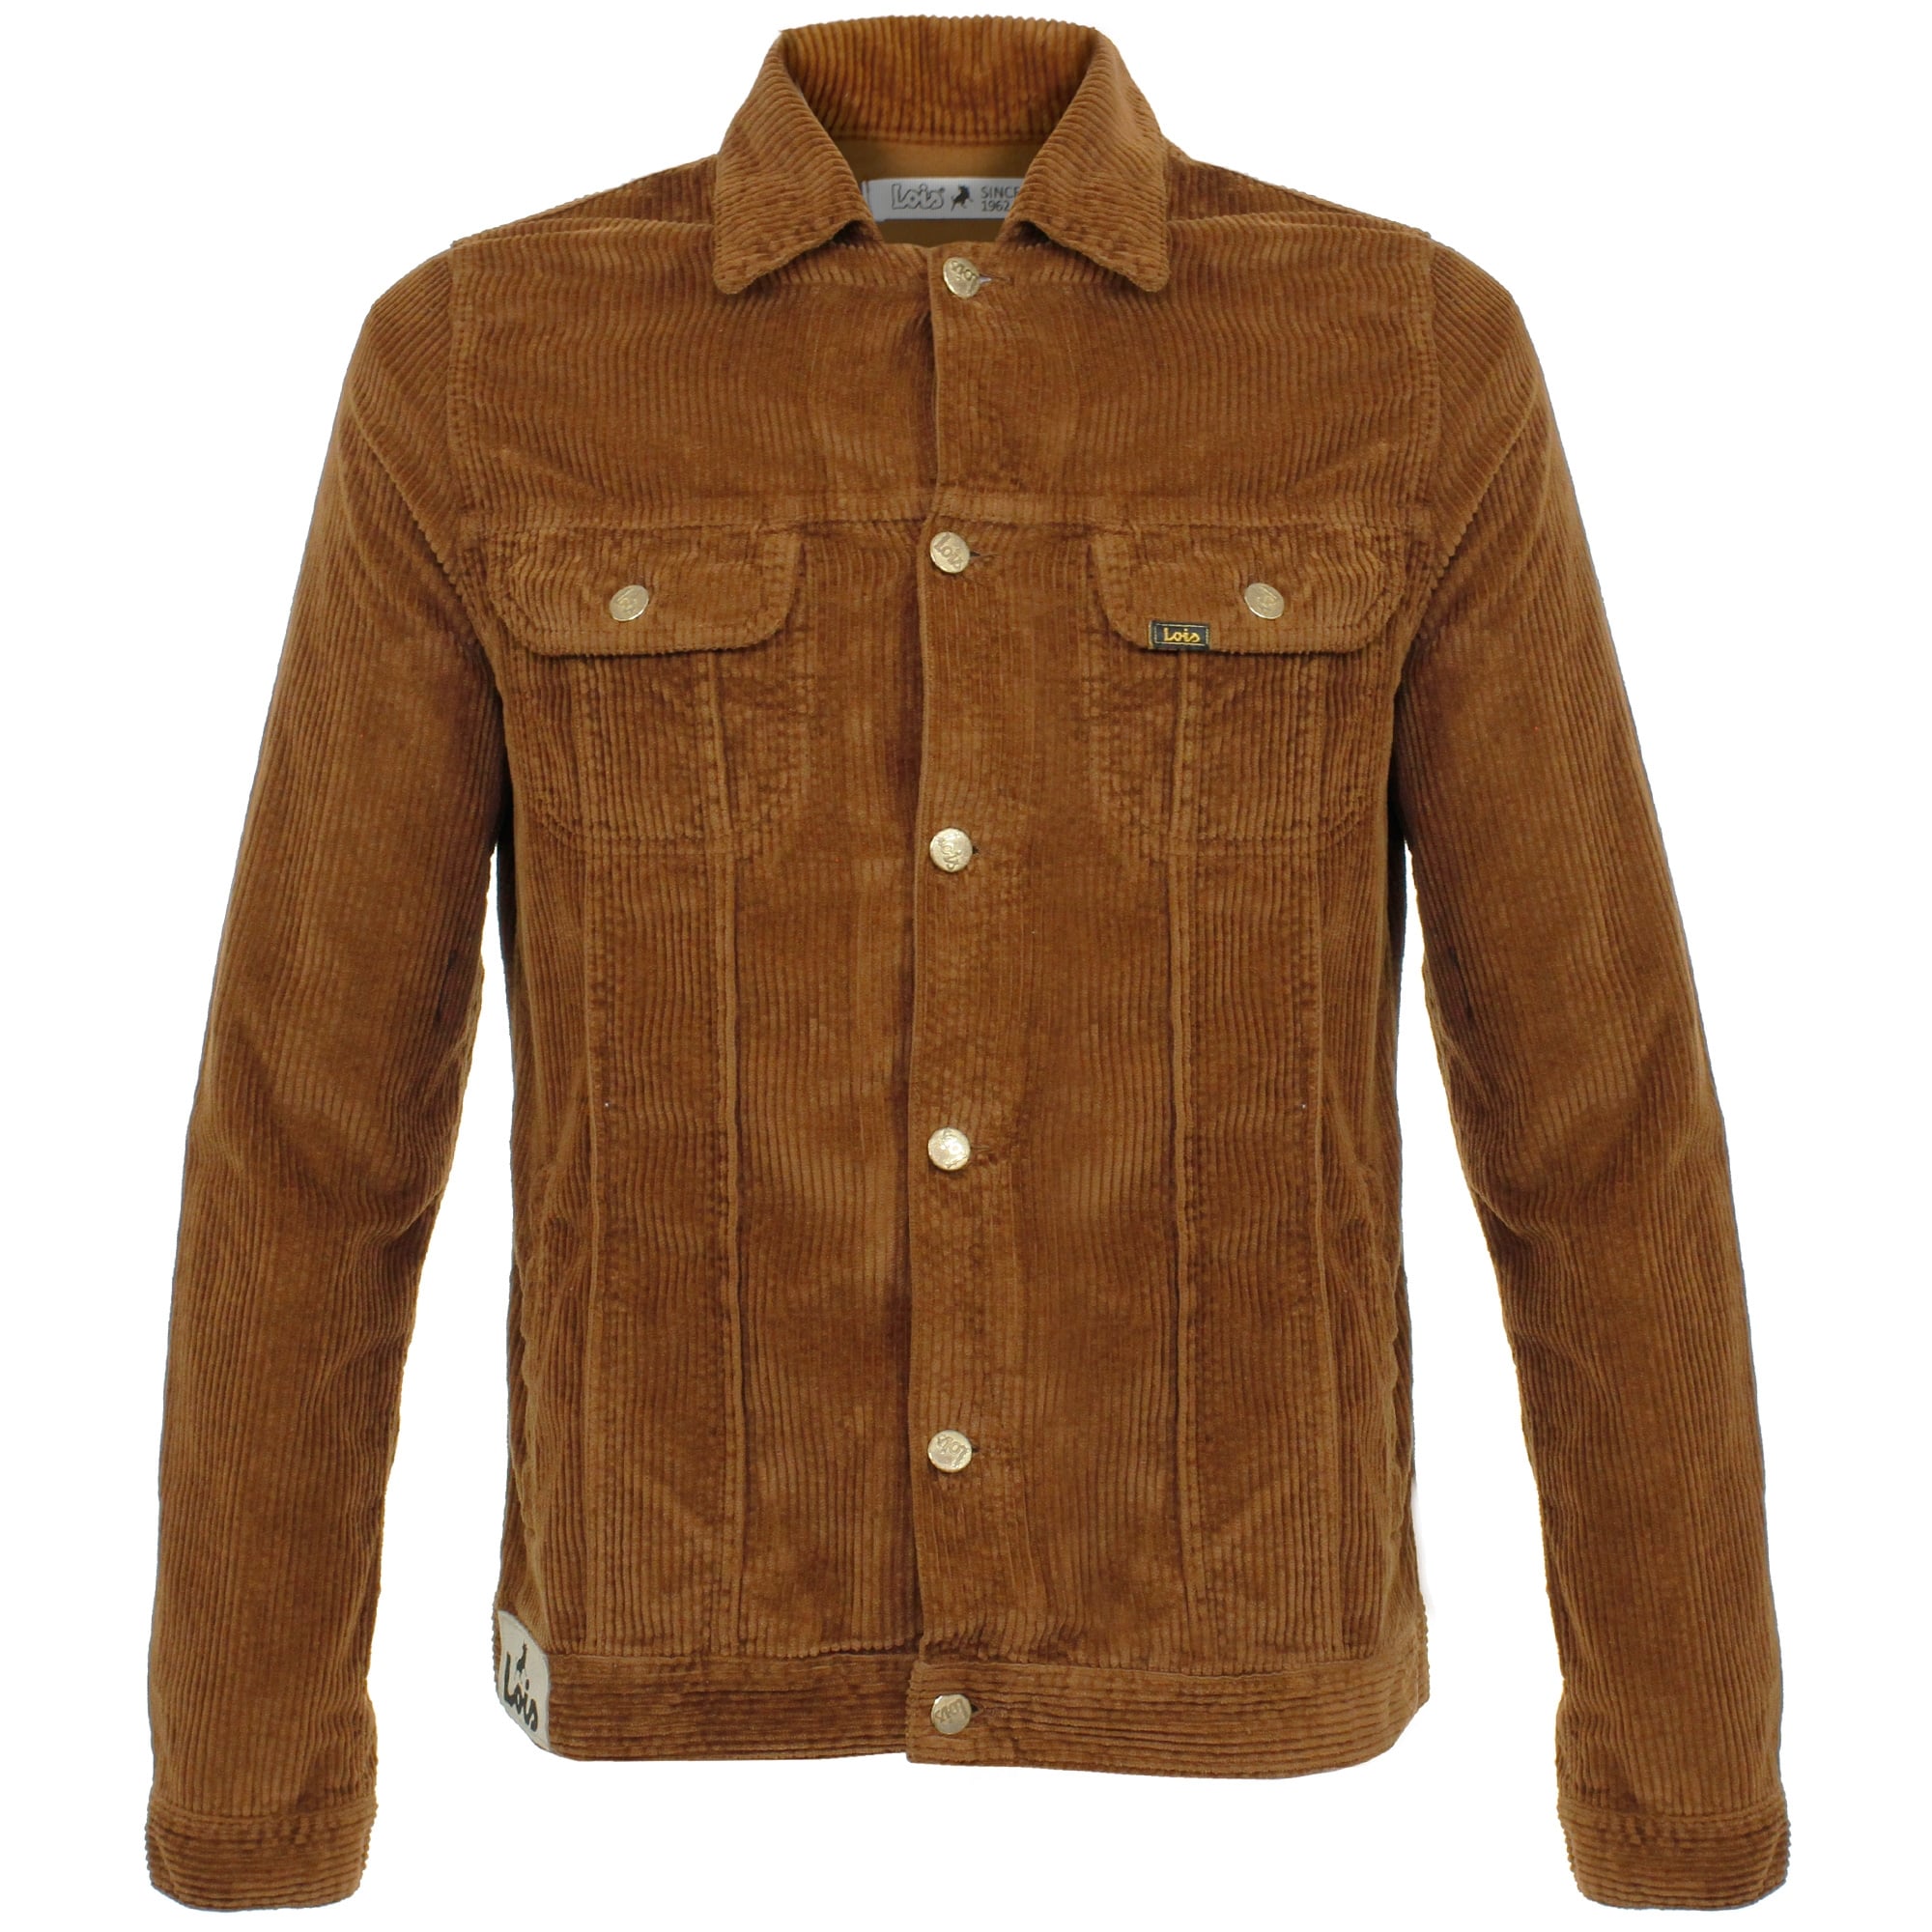 lois-jeans-jumbo-cord-brown-corduroy-jacket-1001394br-p25382-98572_image